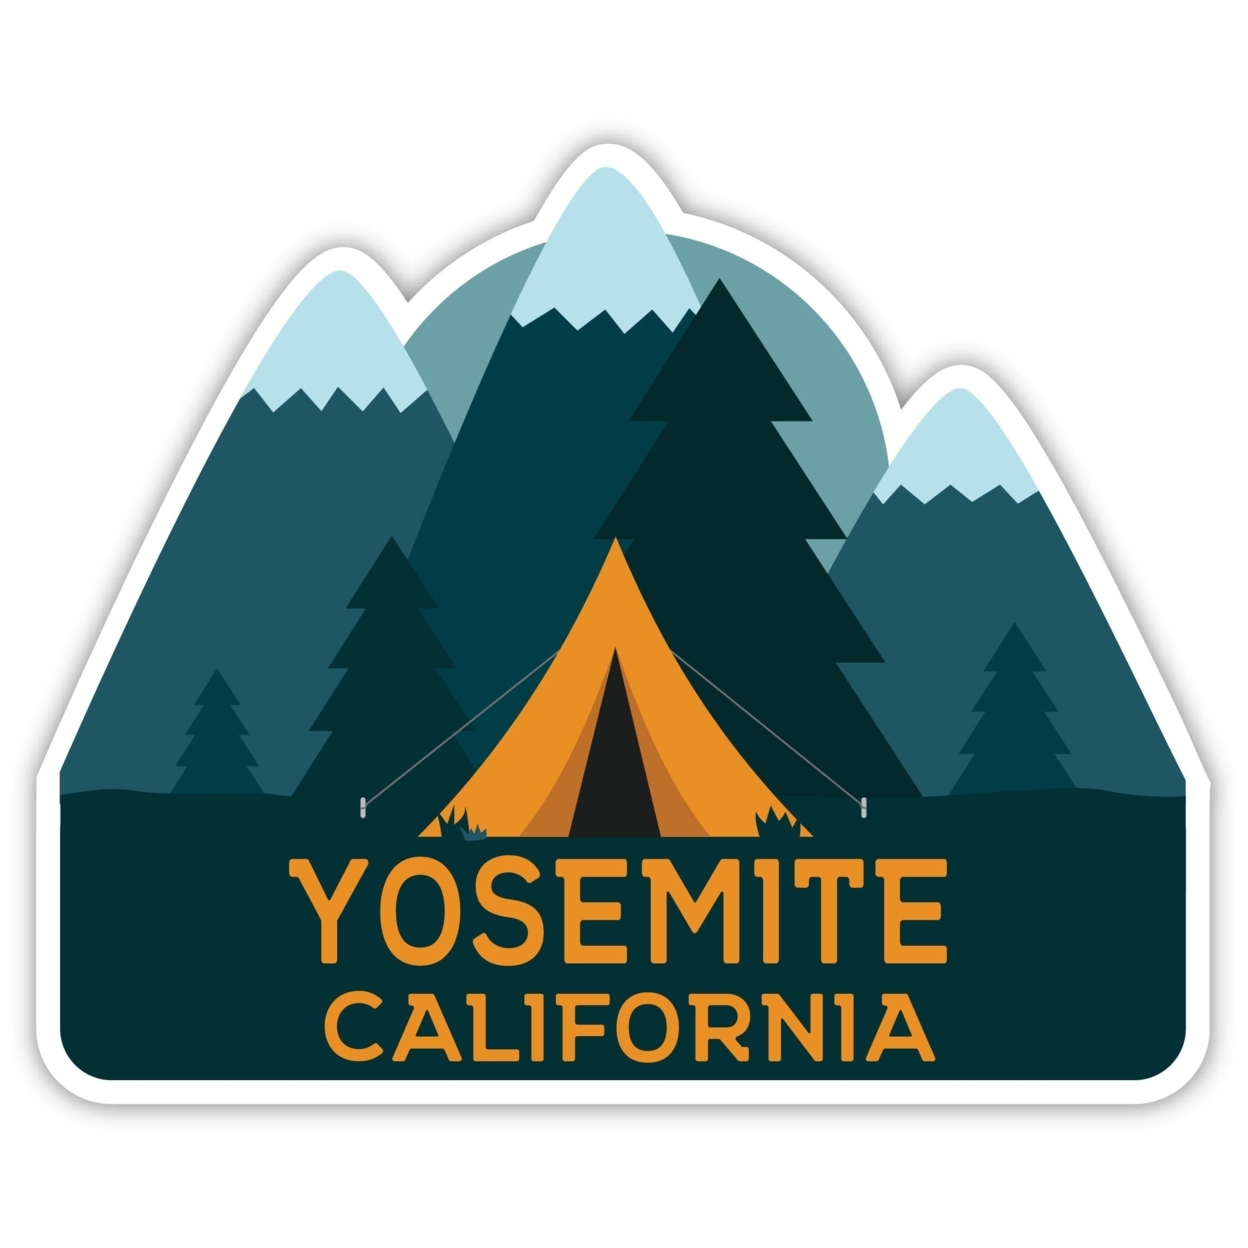 Yosemite California Souvenir Decorative Stickers (Choose Theme And Size) - Single Unit, 4-Inch, Tent